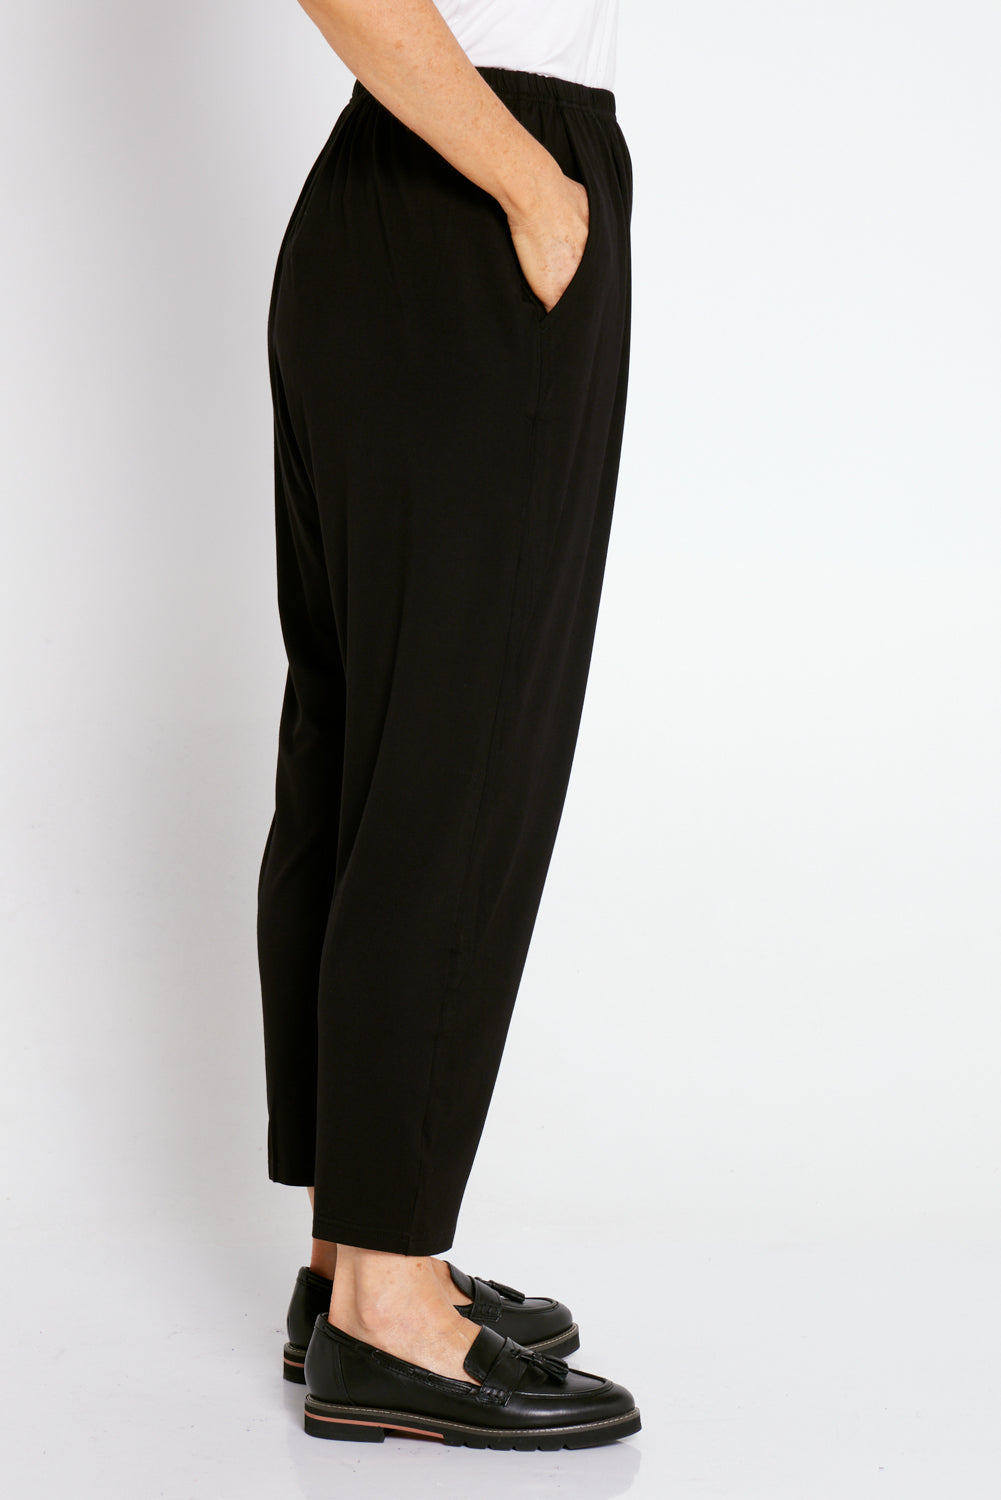 TULIO fashion, Gianna Tall Pants - Black